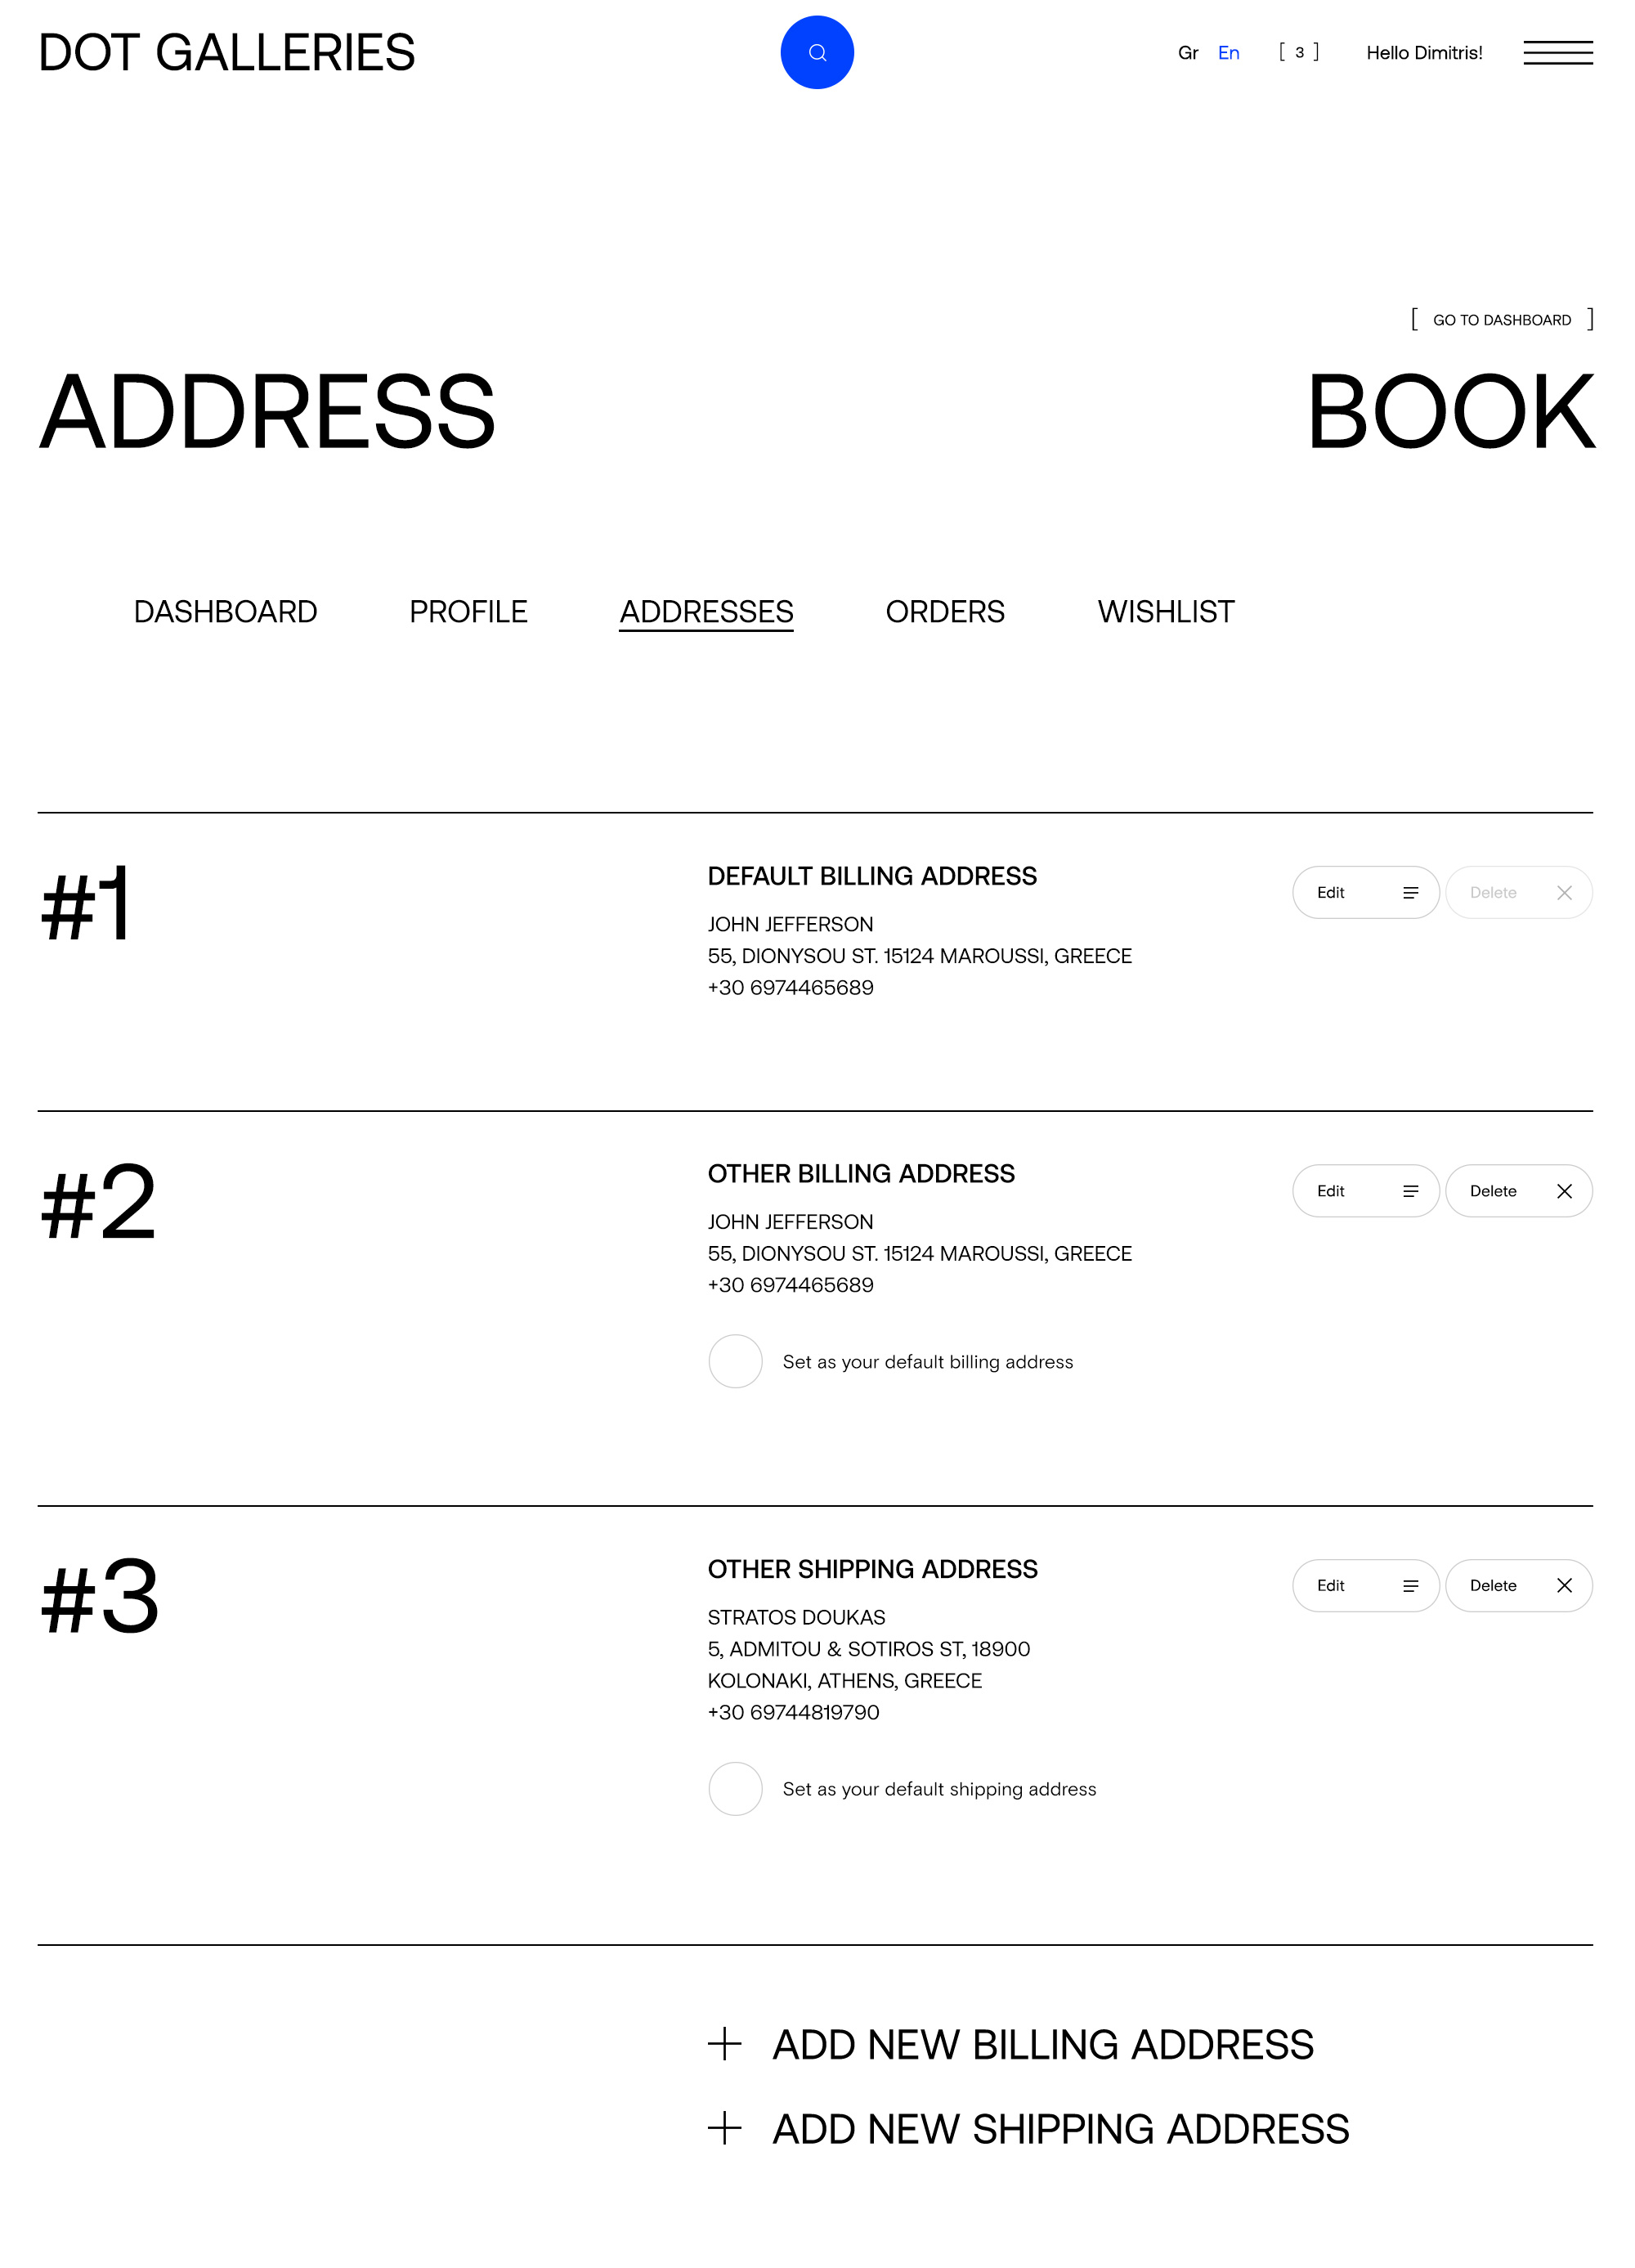 dot galleries website design address book kommigraphics